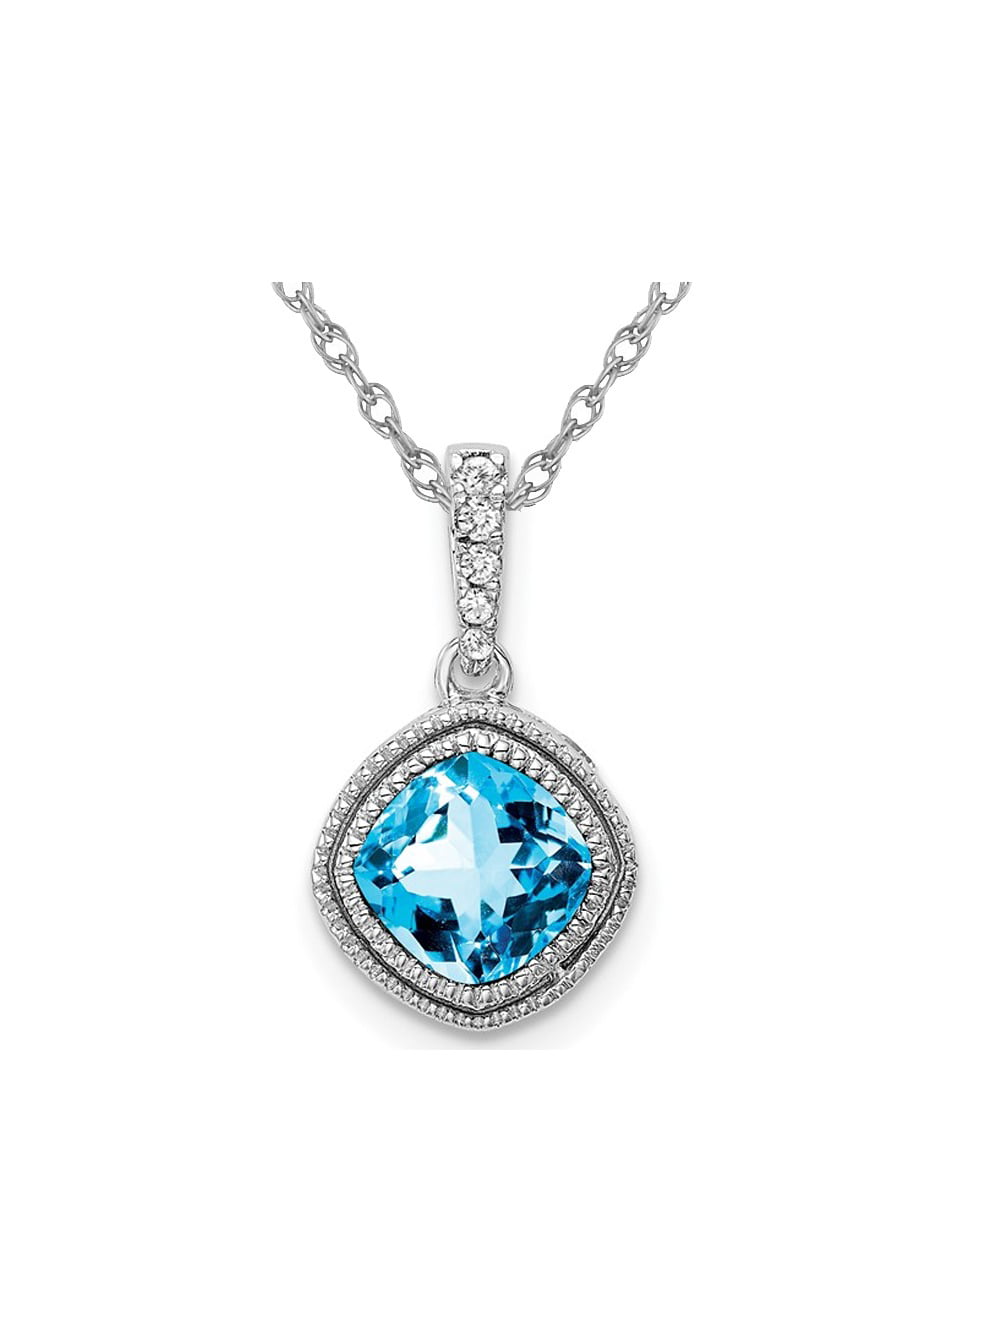 10k blue topaz and diamond necklace pendant